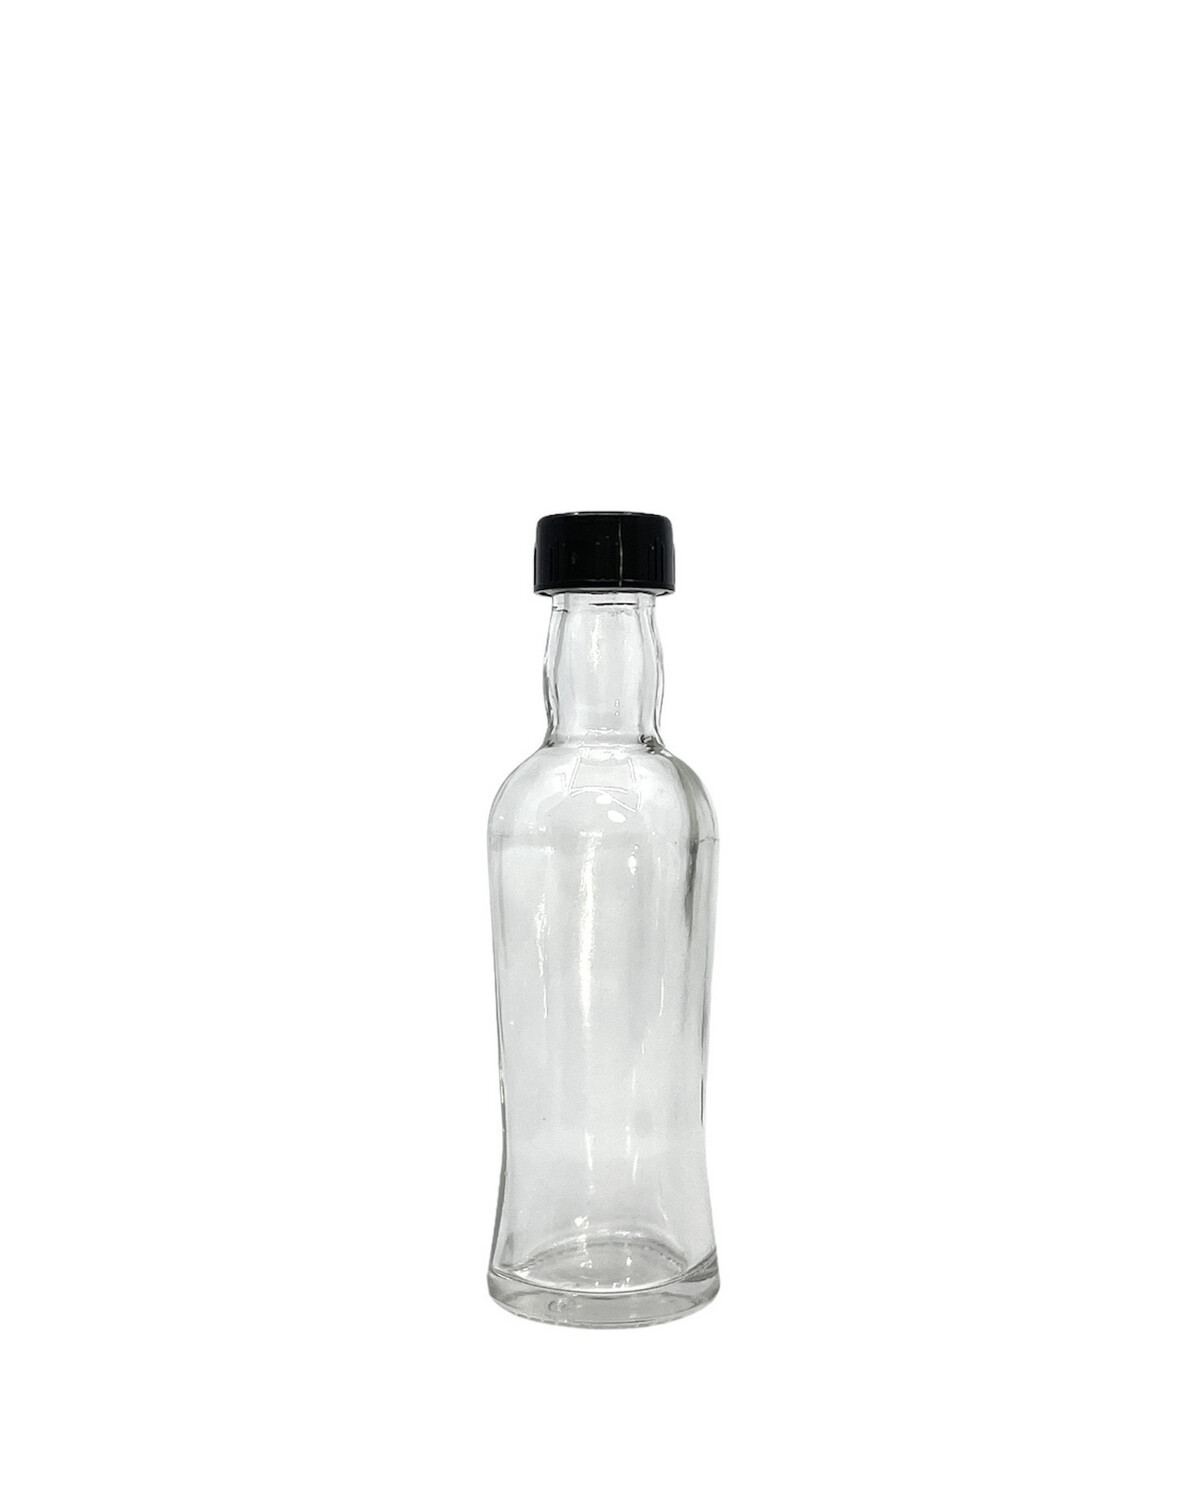 50ml Miniature Glass Bottle, Plastic Screw Cap